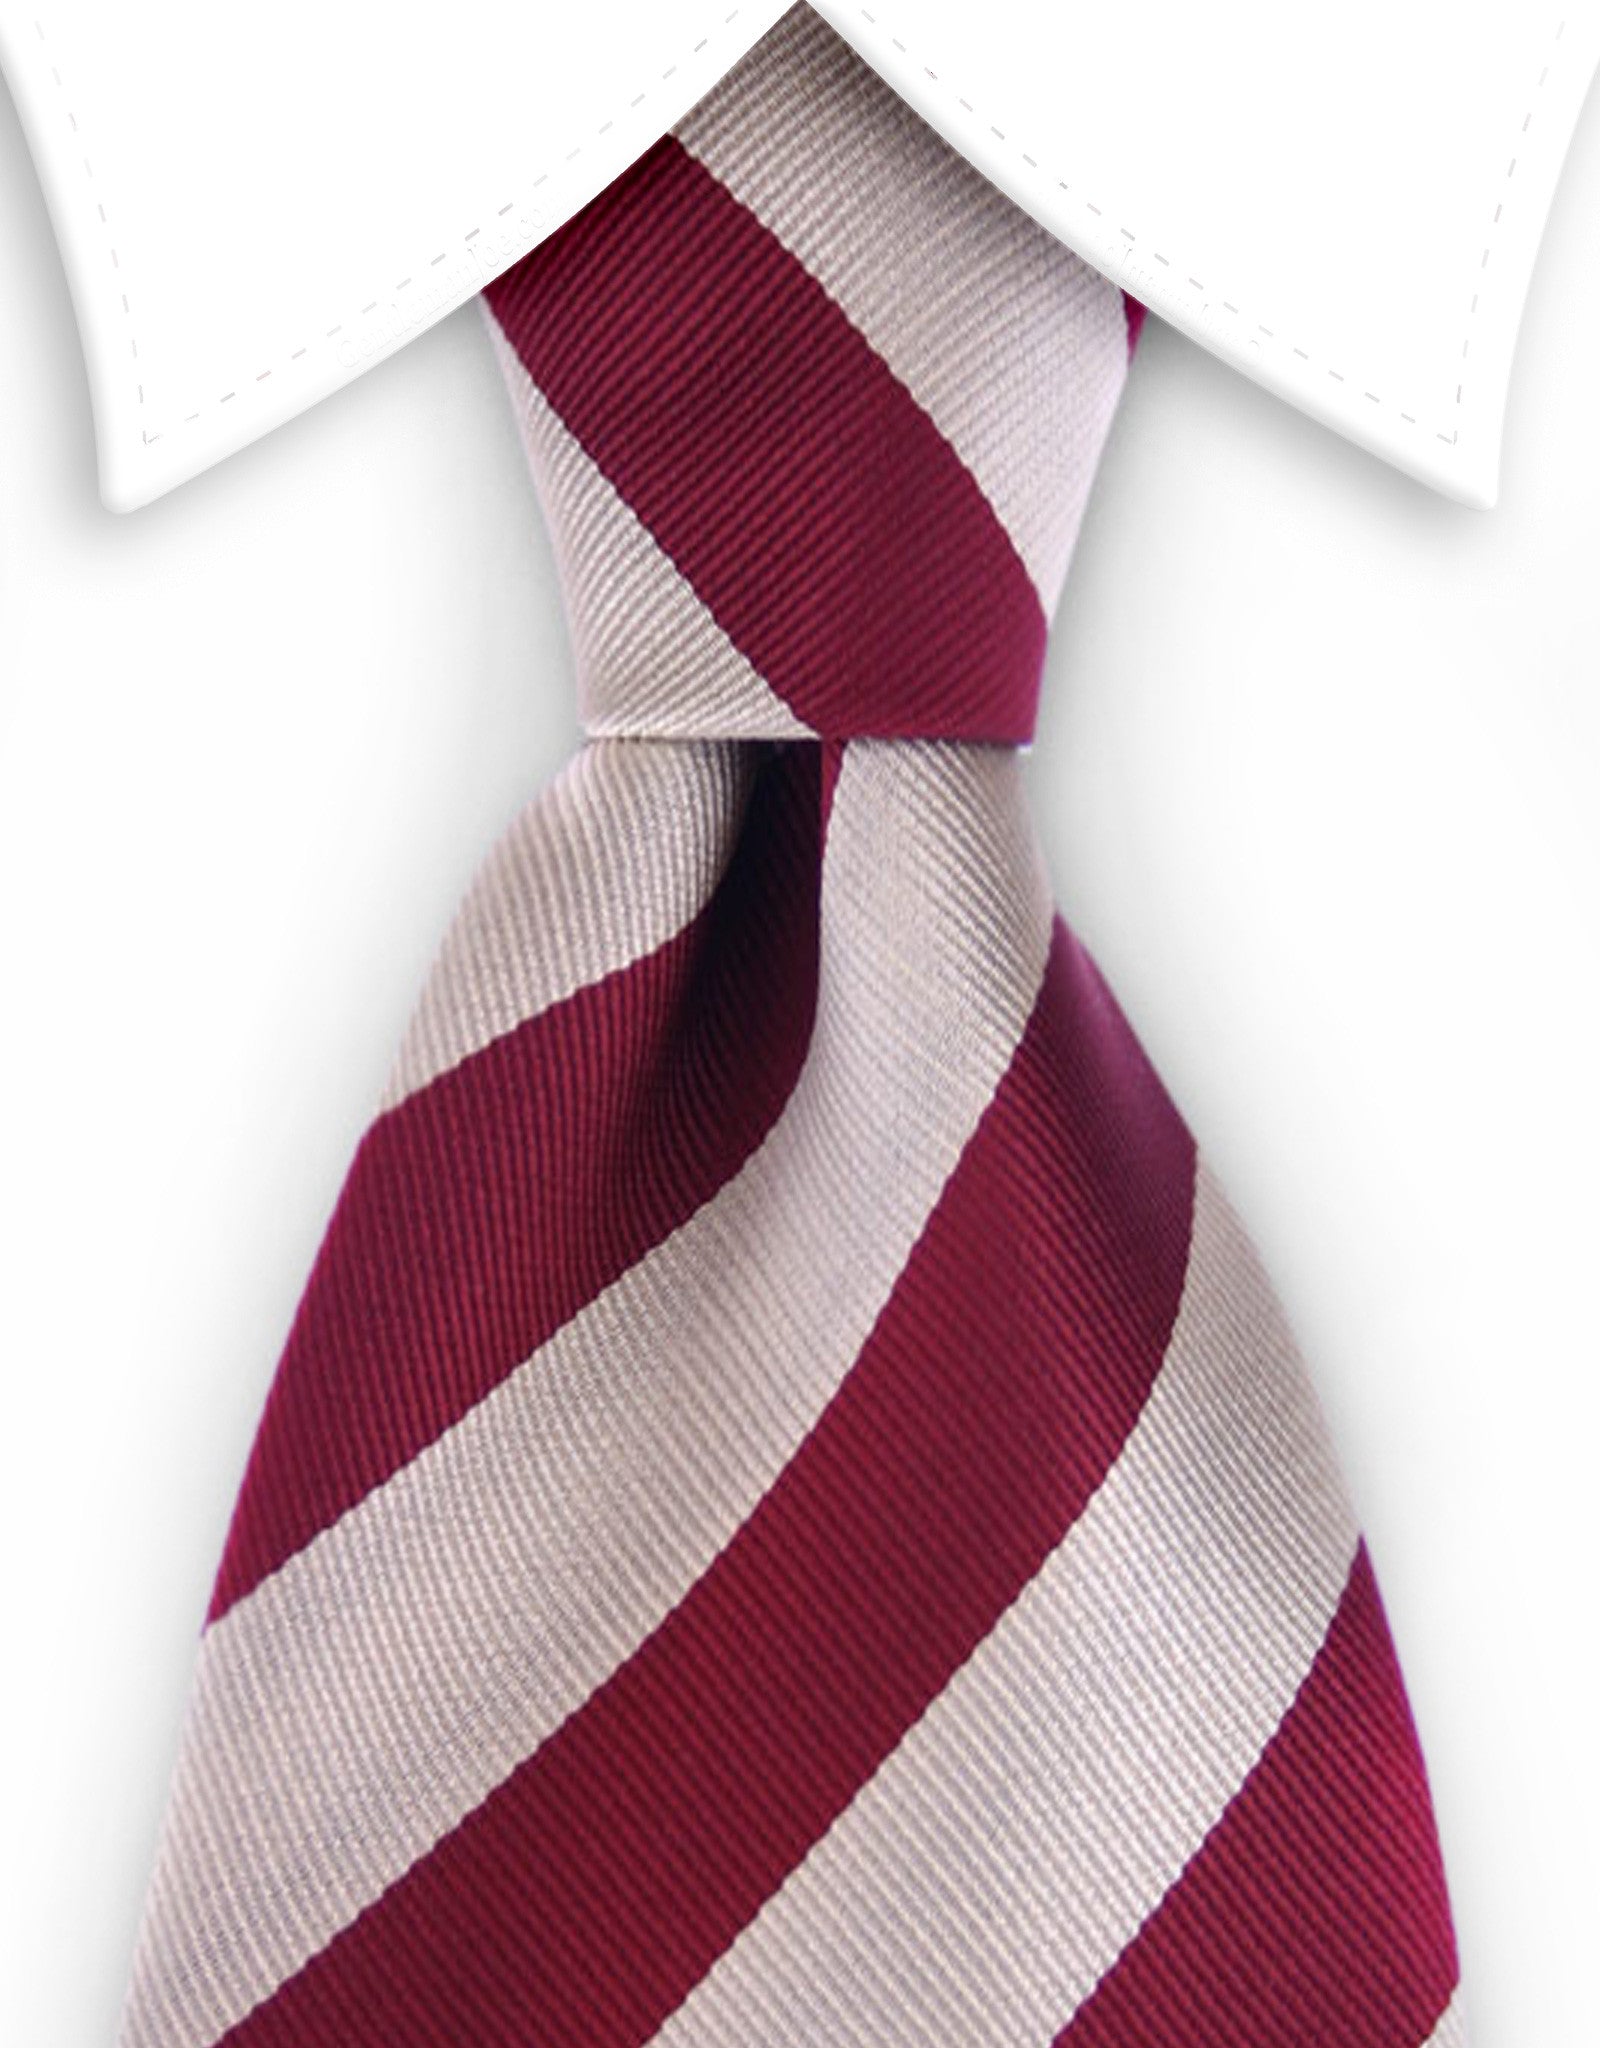 Burgundy & Beige Collegiate Tie